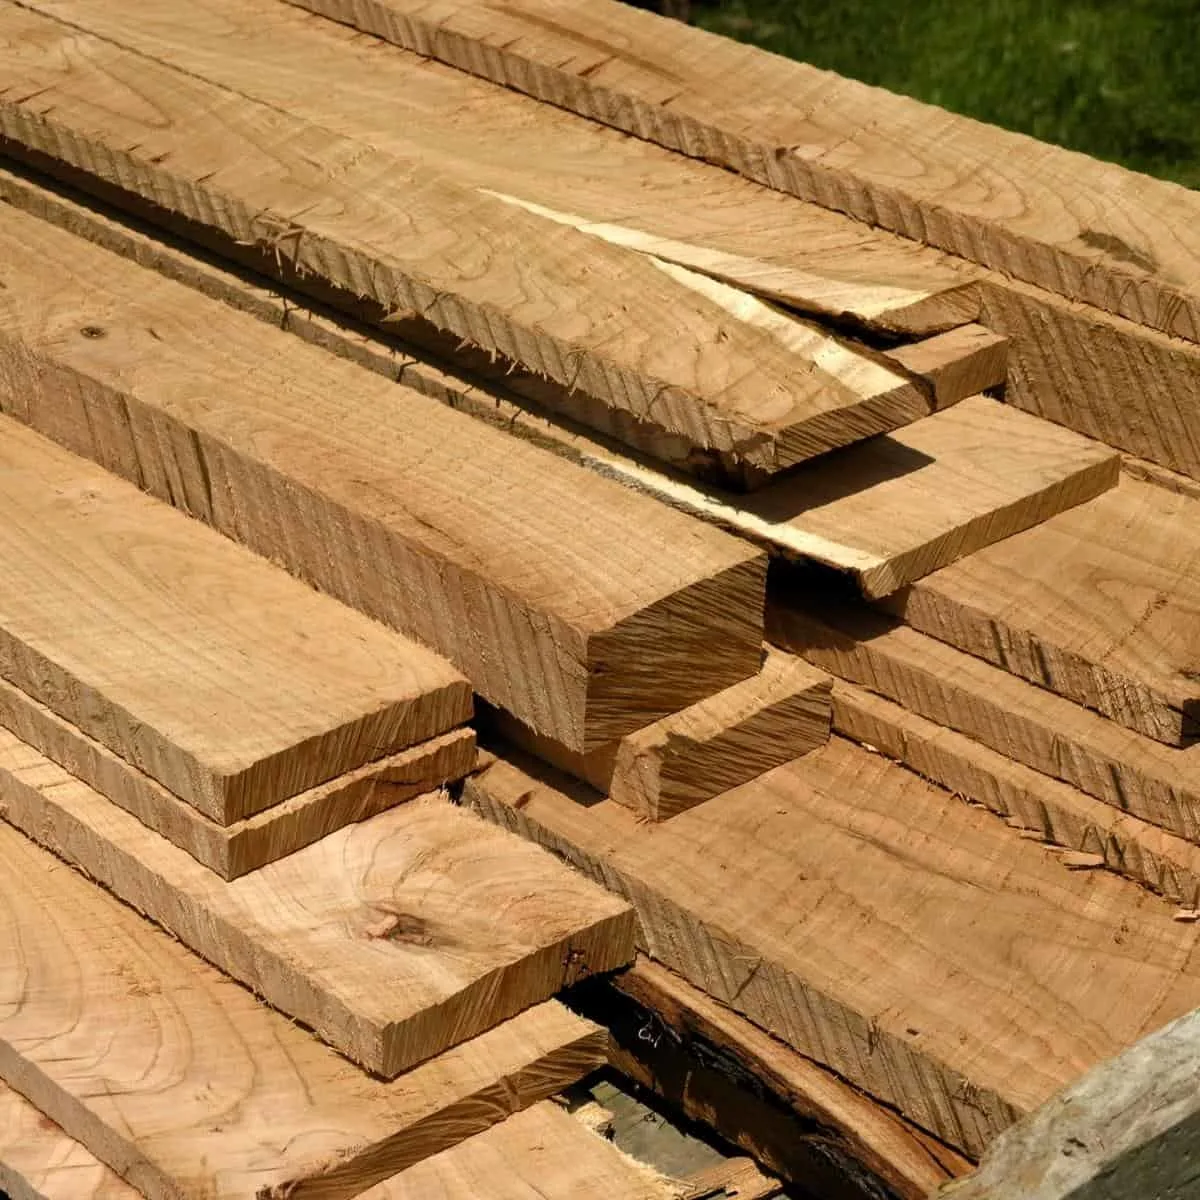 rough sawn lumber in a pile